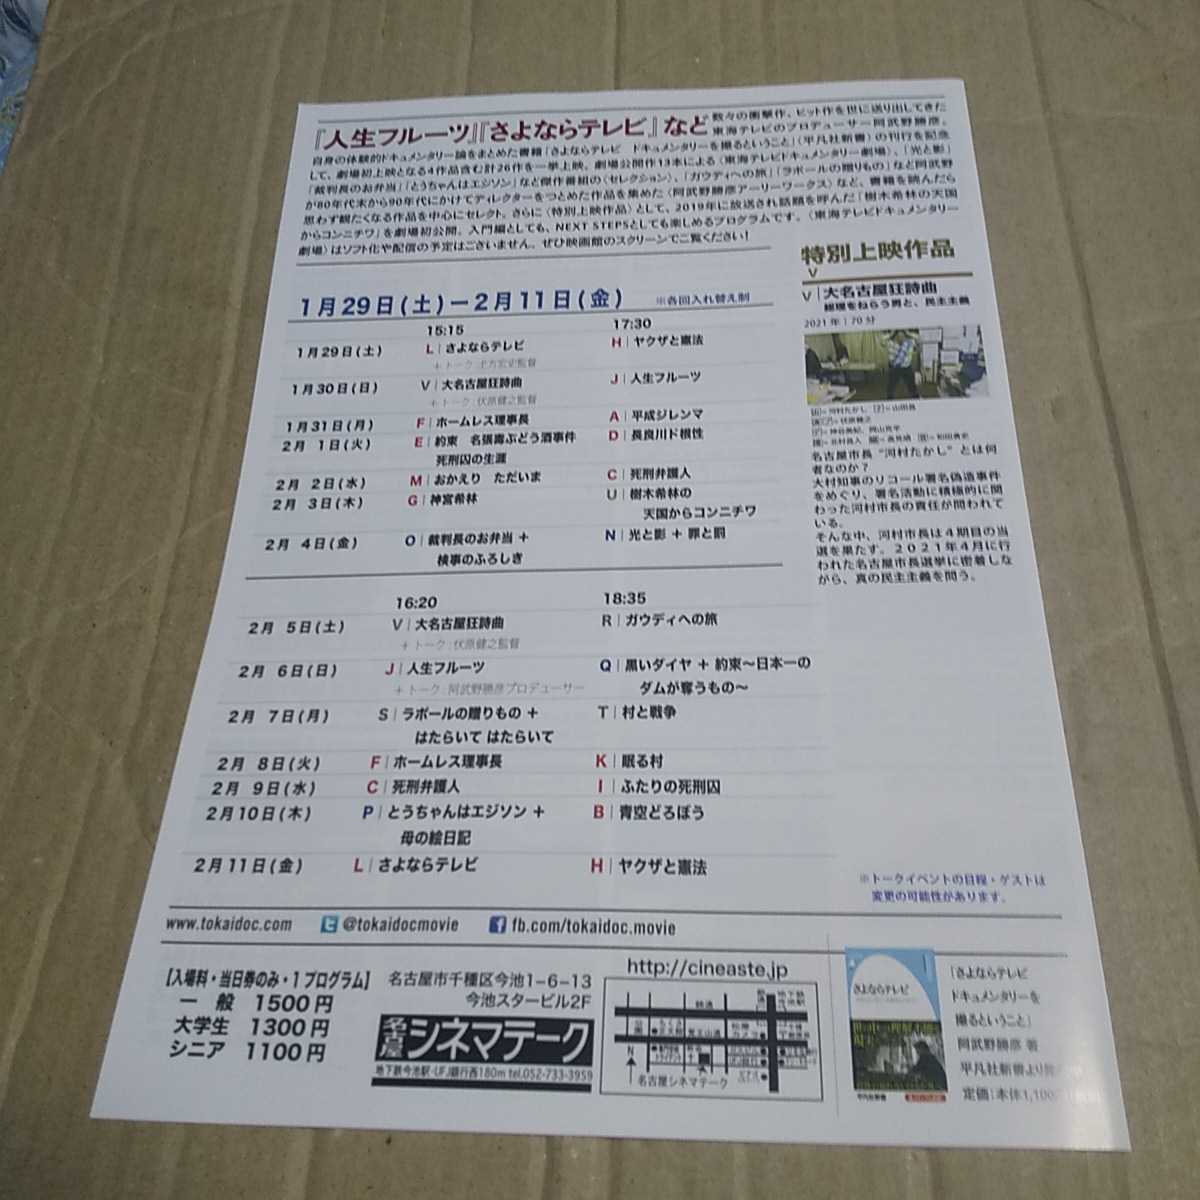  Tokai tv documentary. pushed sale * movie leaflet 